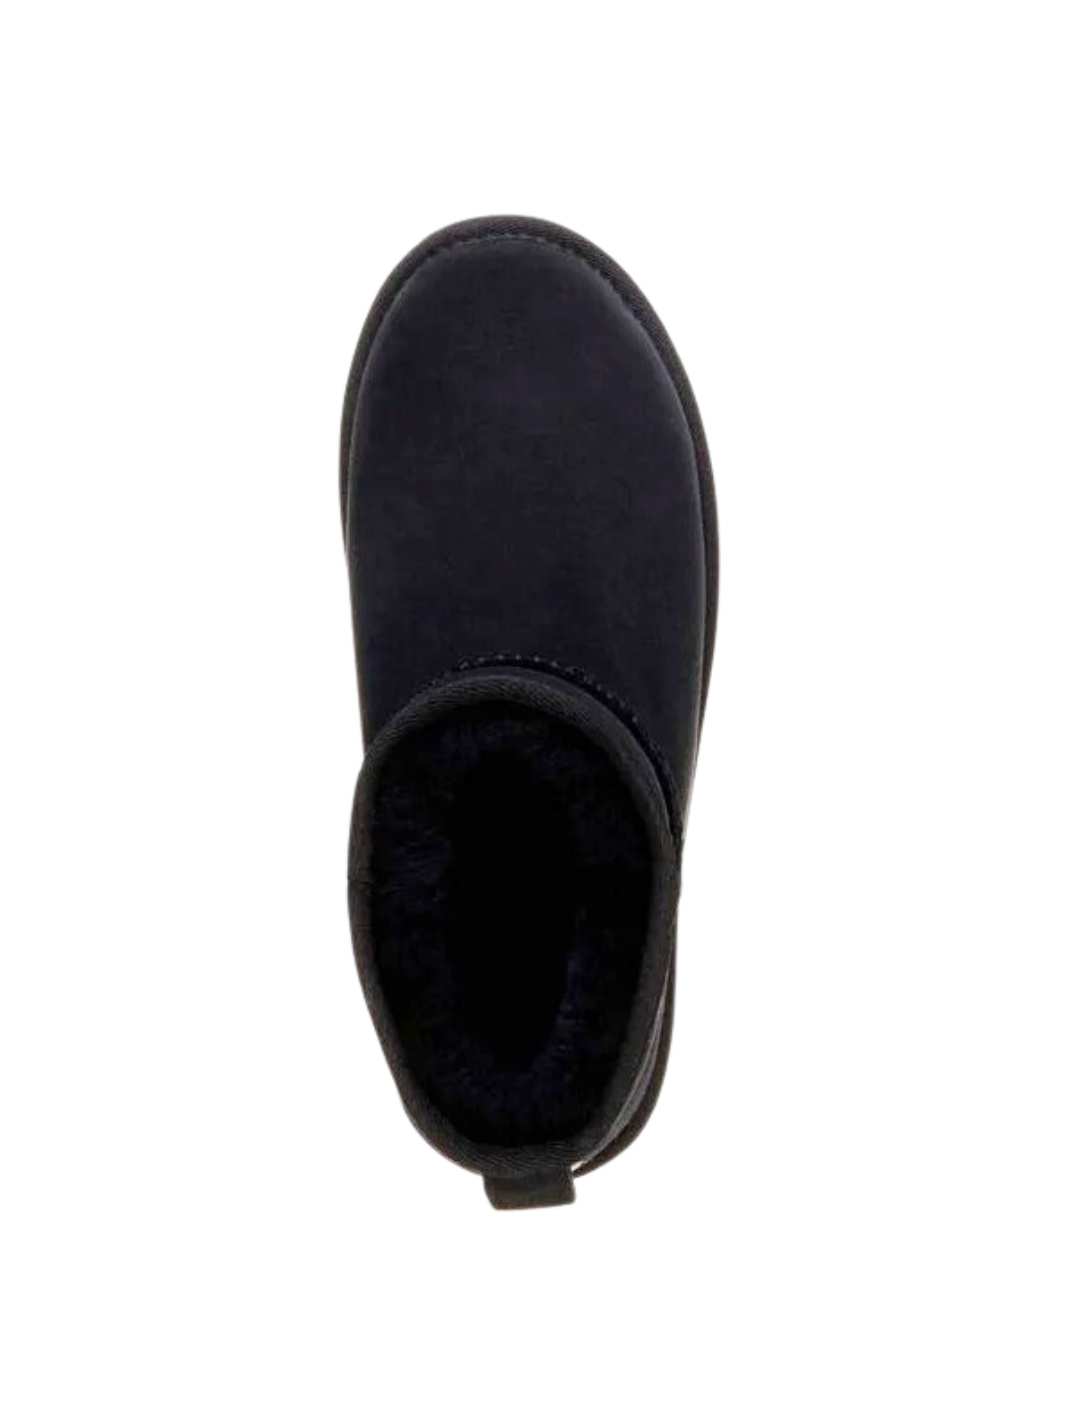 EMU Shoes Boots | Stinger Micro Black